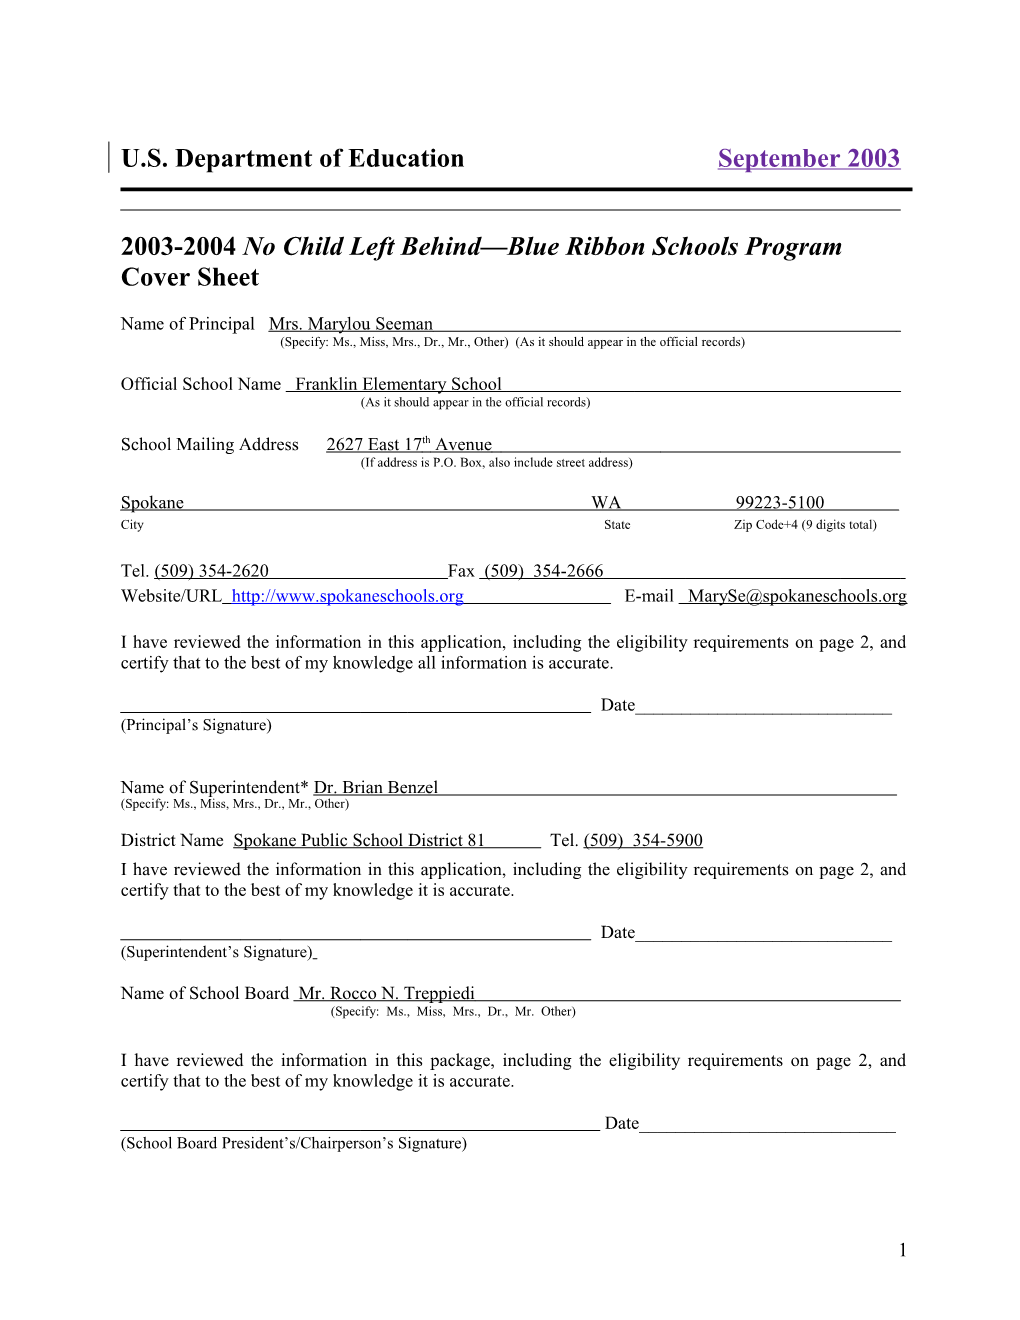 Franklin Elementary School 2004 No Child Left Behind-Blue Ribbon School Application (Msword)